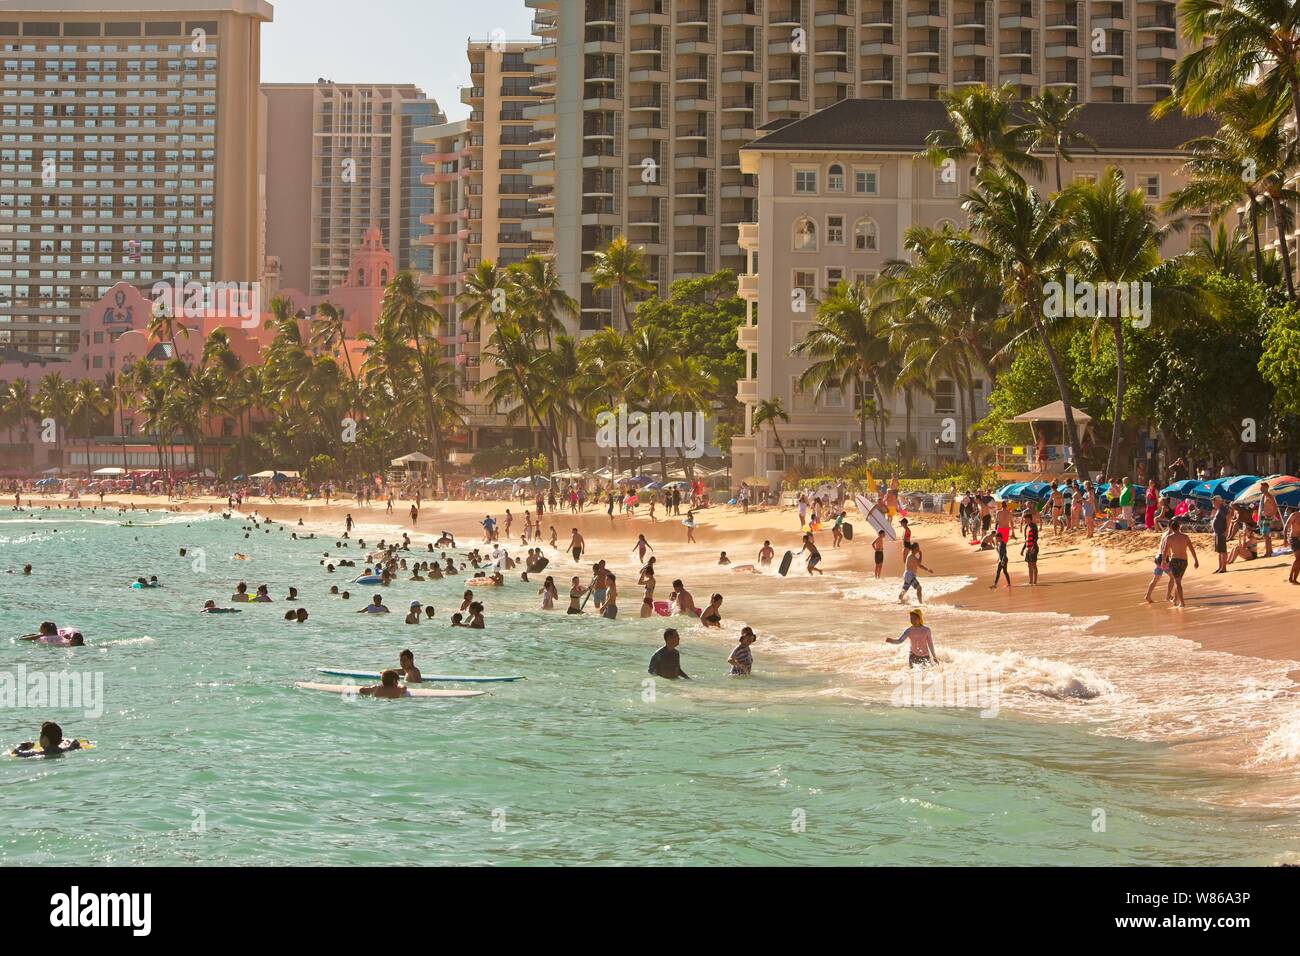 La spiaggia di Waikiki, HI, STATI UNITI D'AMERICA - Luglio 16, 2019: vista hotel di Waikiki Beach. Foto Stock